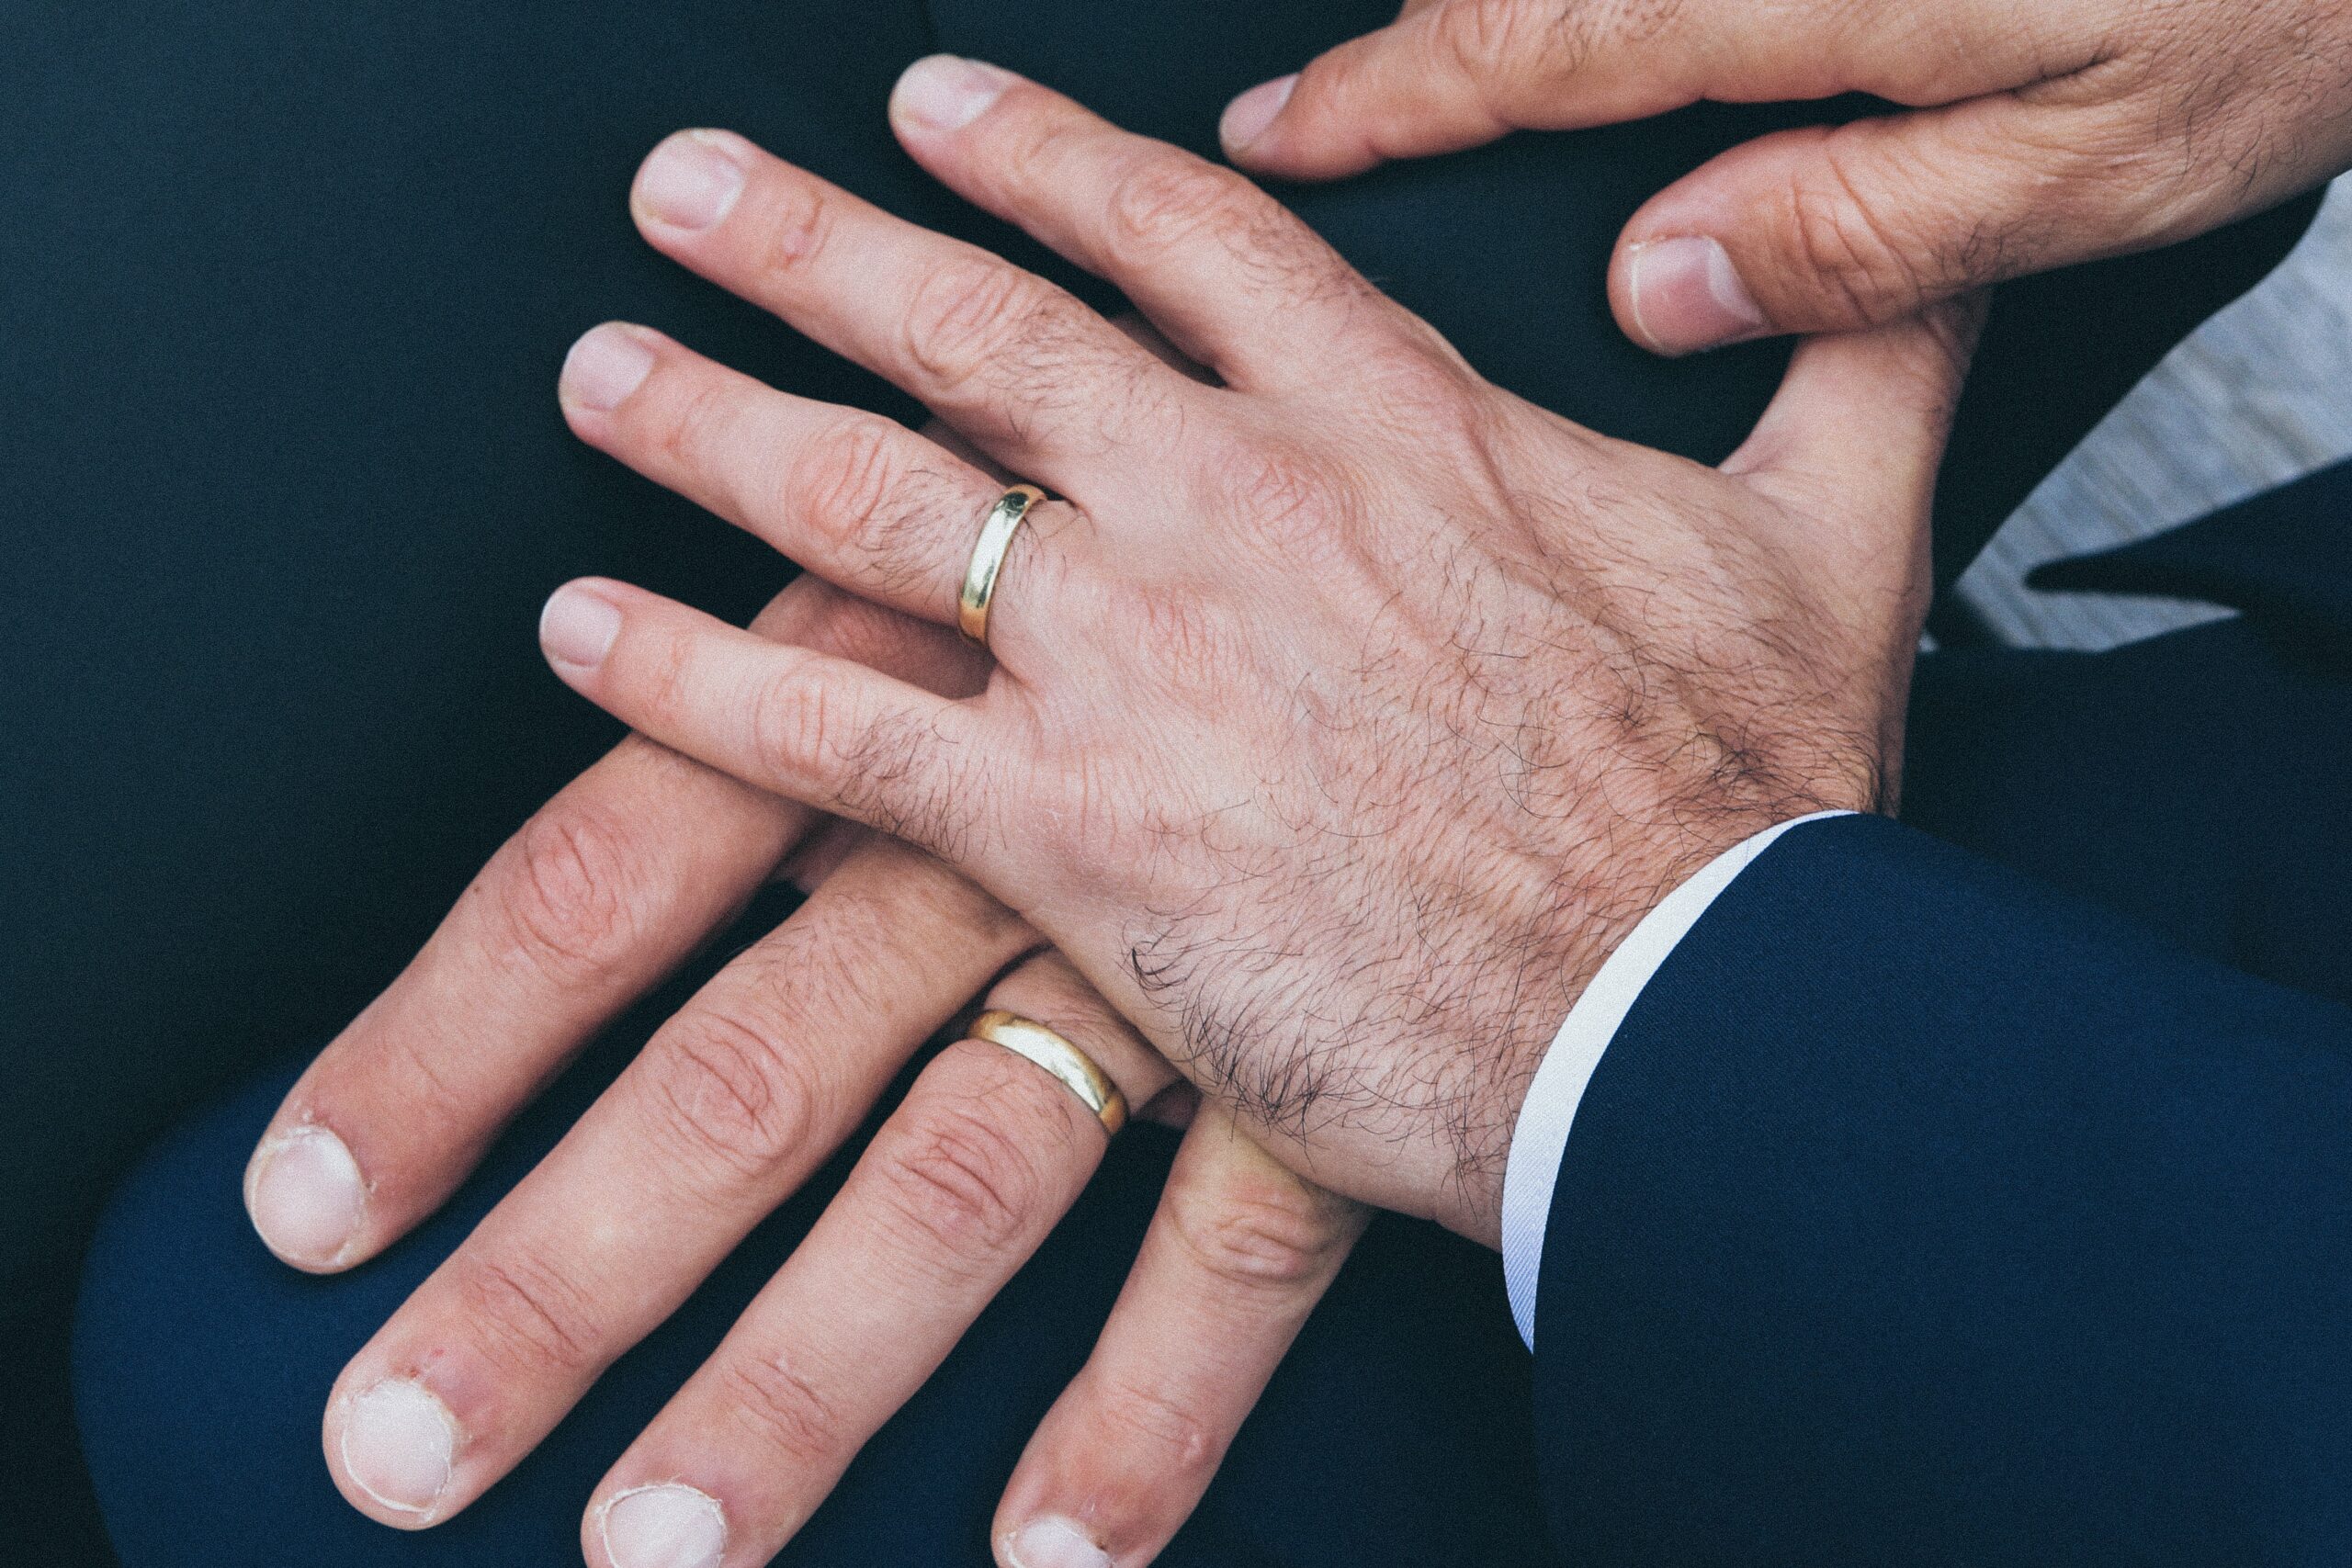 Lei sobre casamento será discutido por deputados. Foto: Nick Karvounis/Unplash